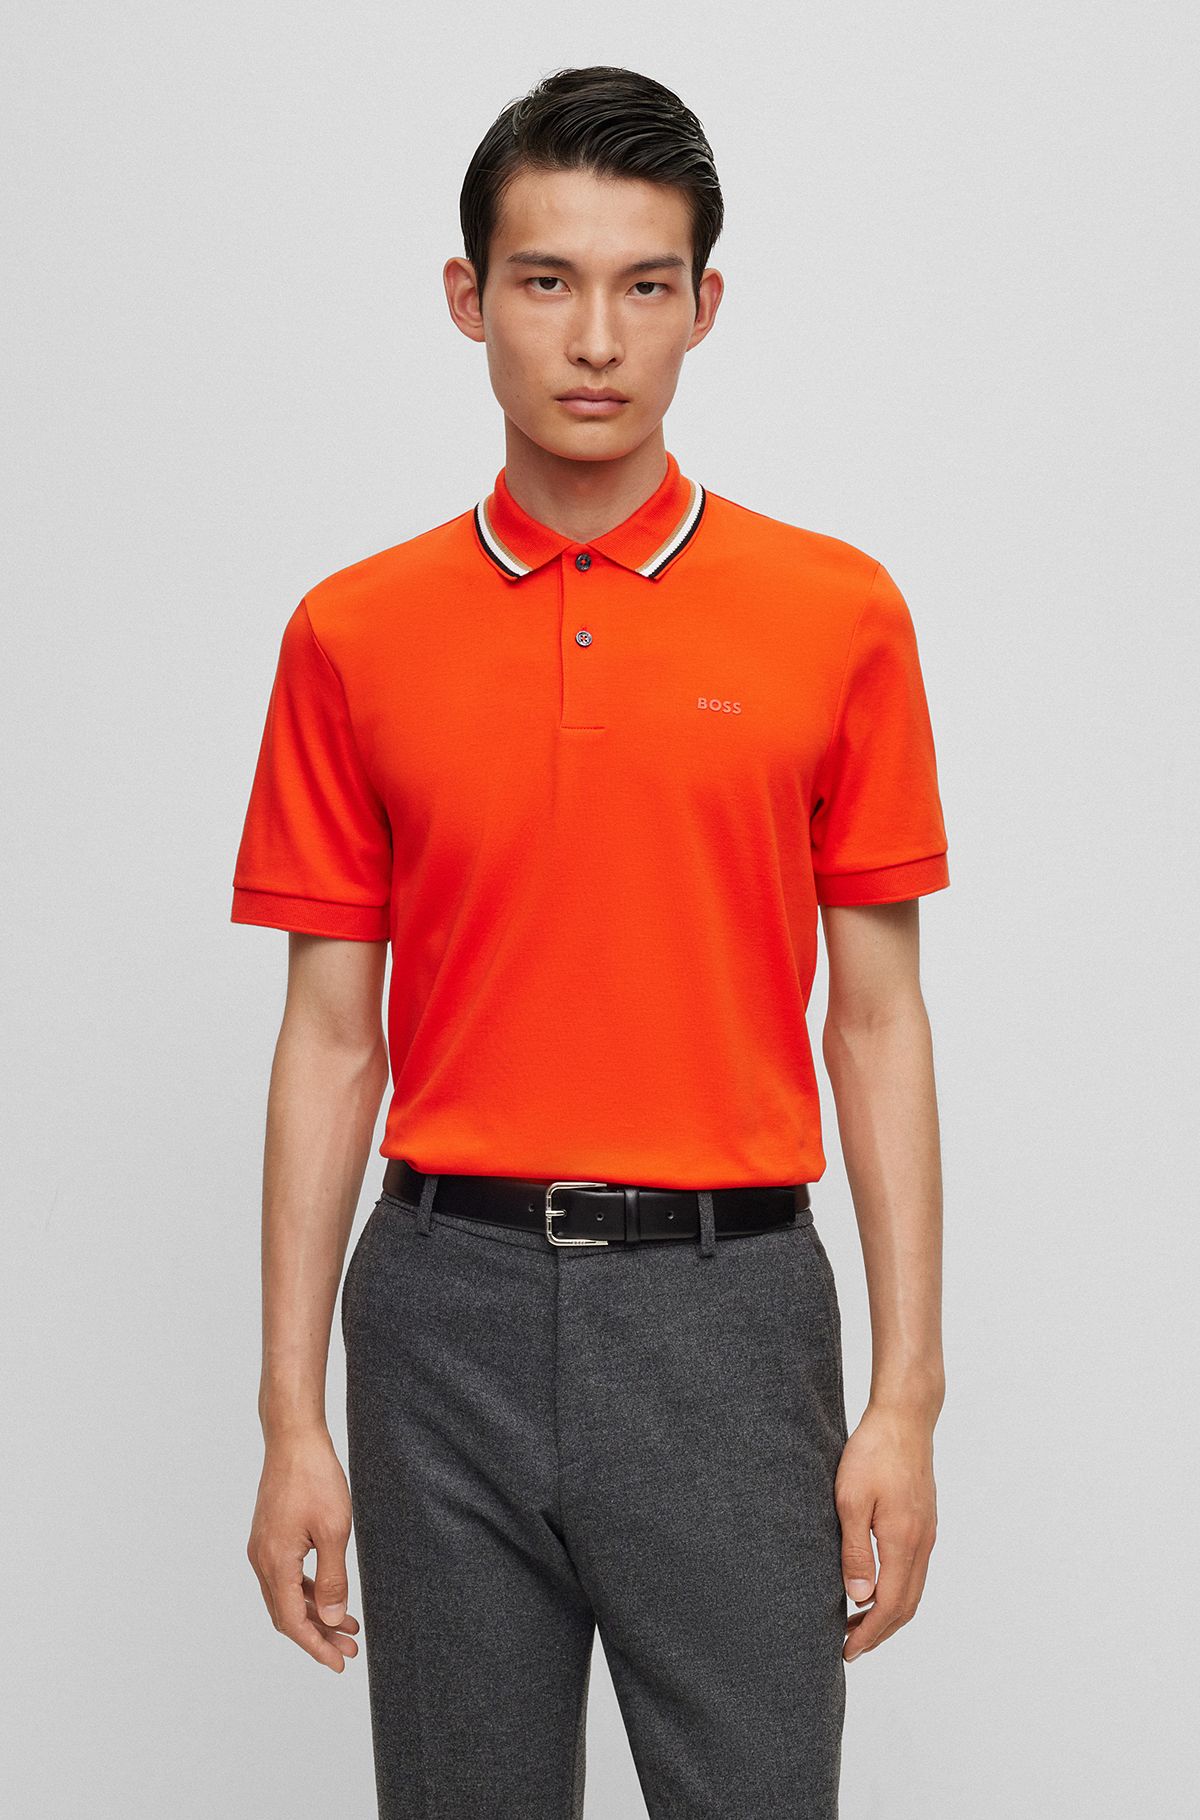 by Orange HUGO in Clothing BOSS | Men